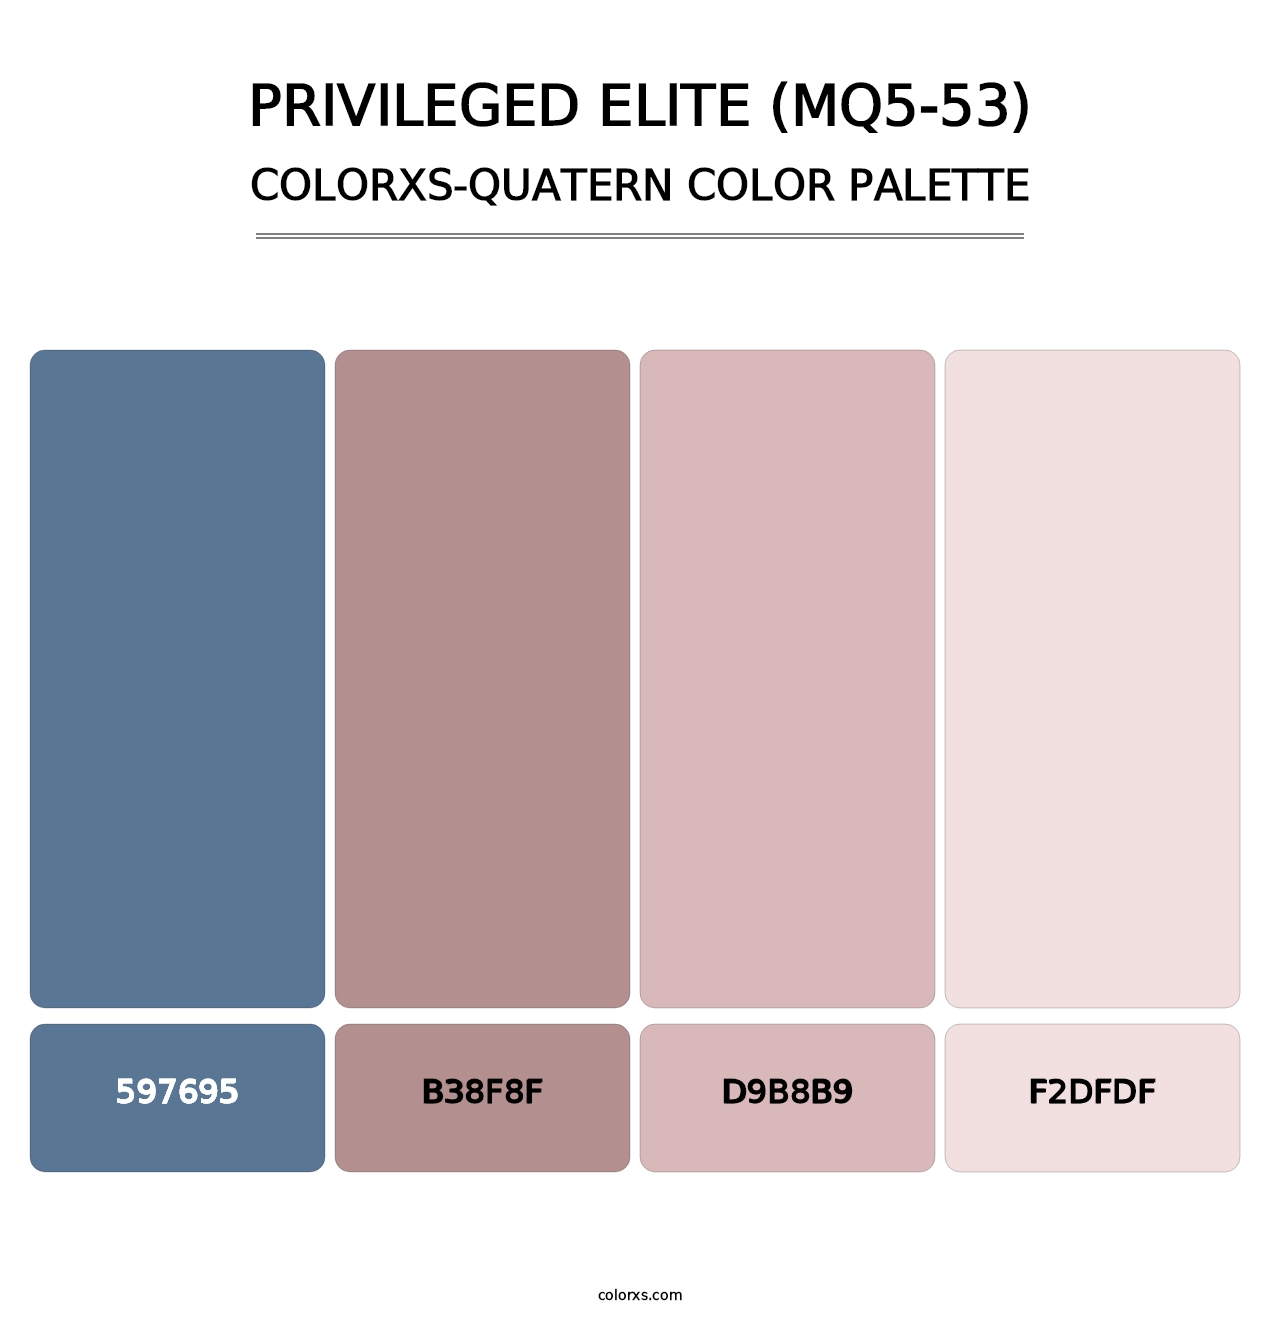 Privileged Elite (MQ5-53) - Colorxs Quatern Palette